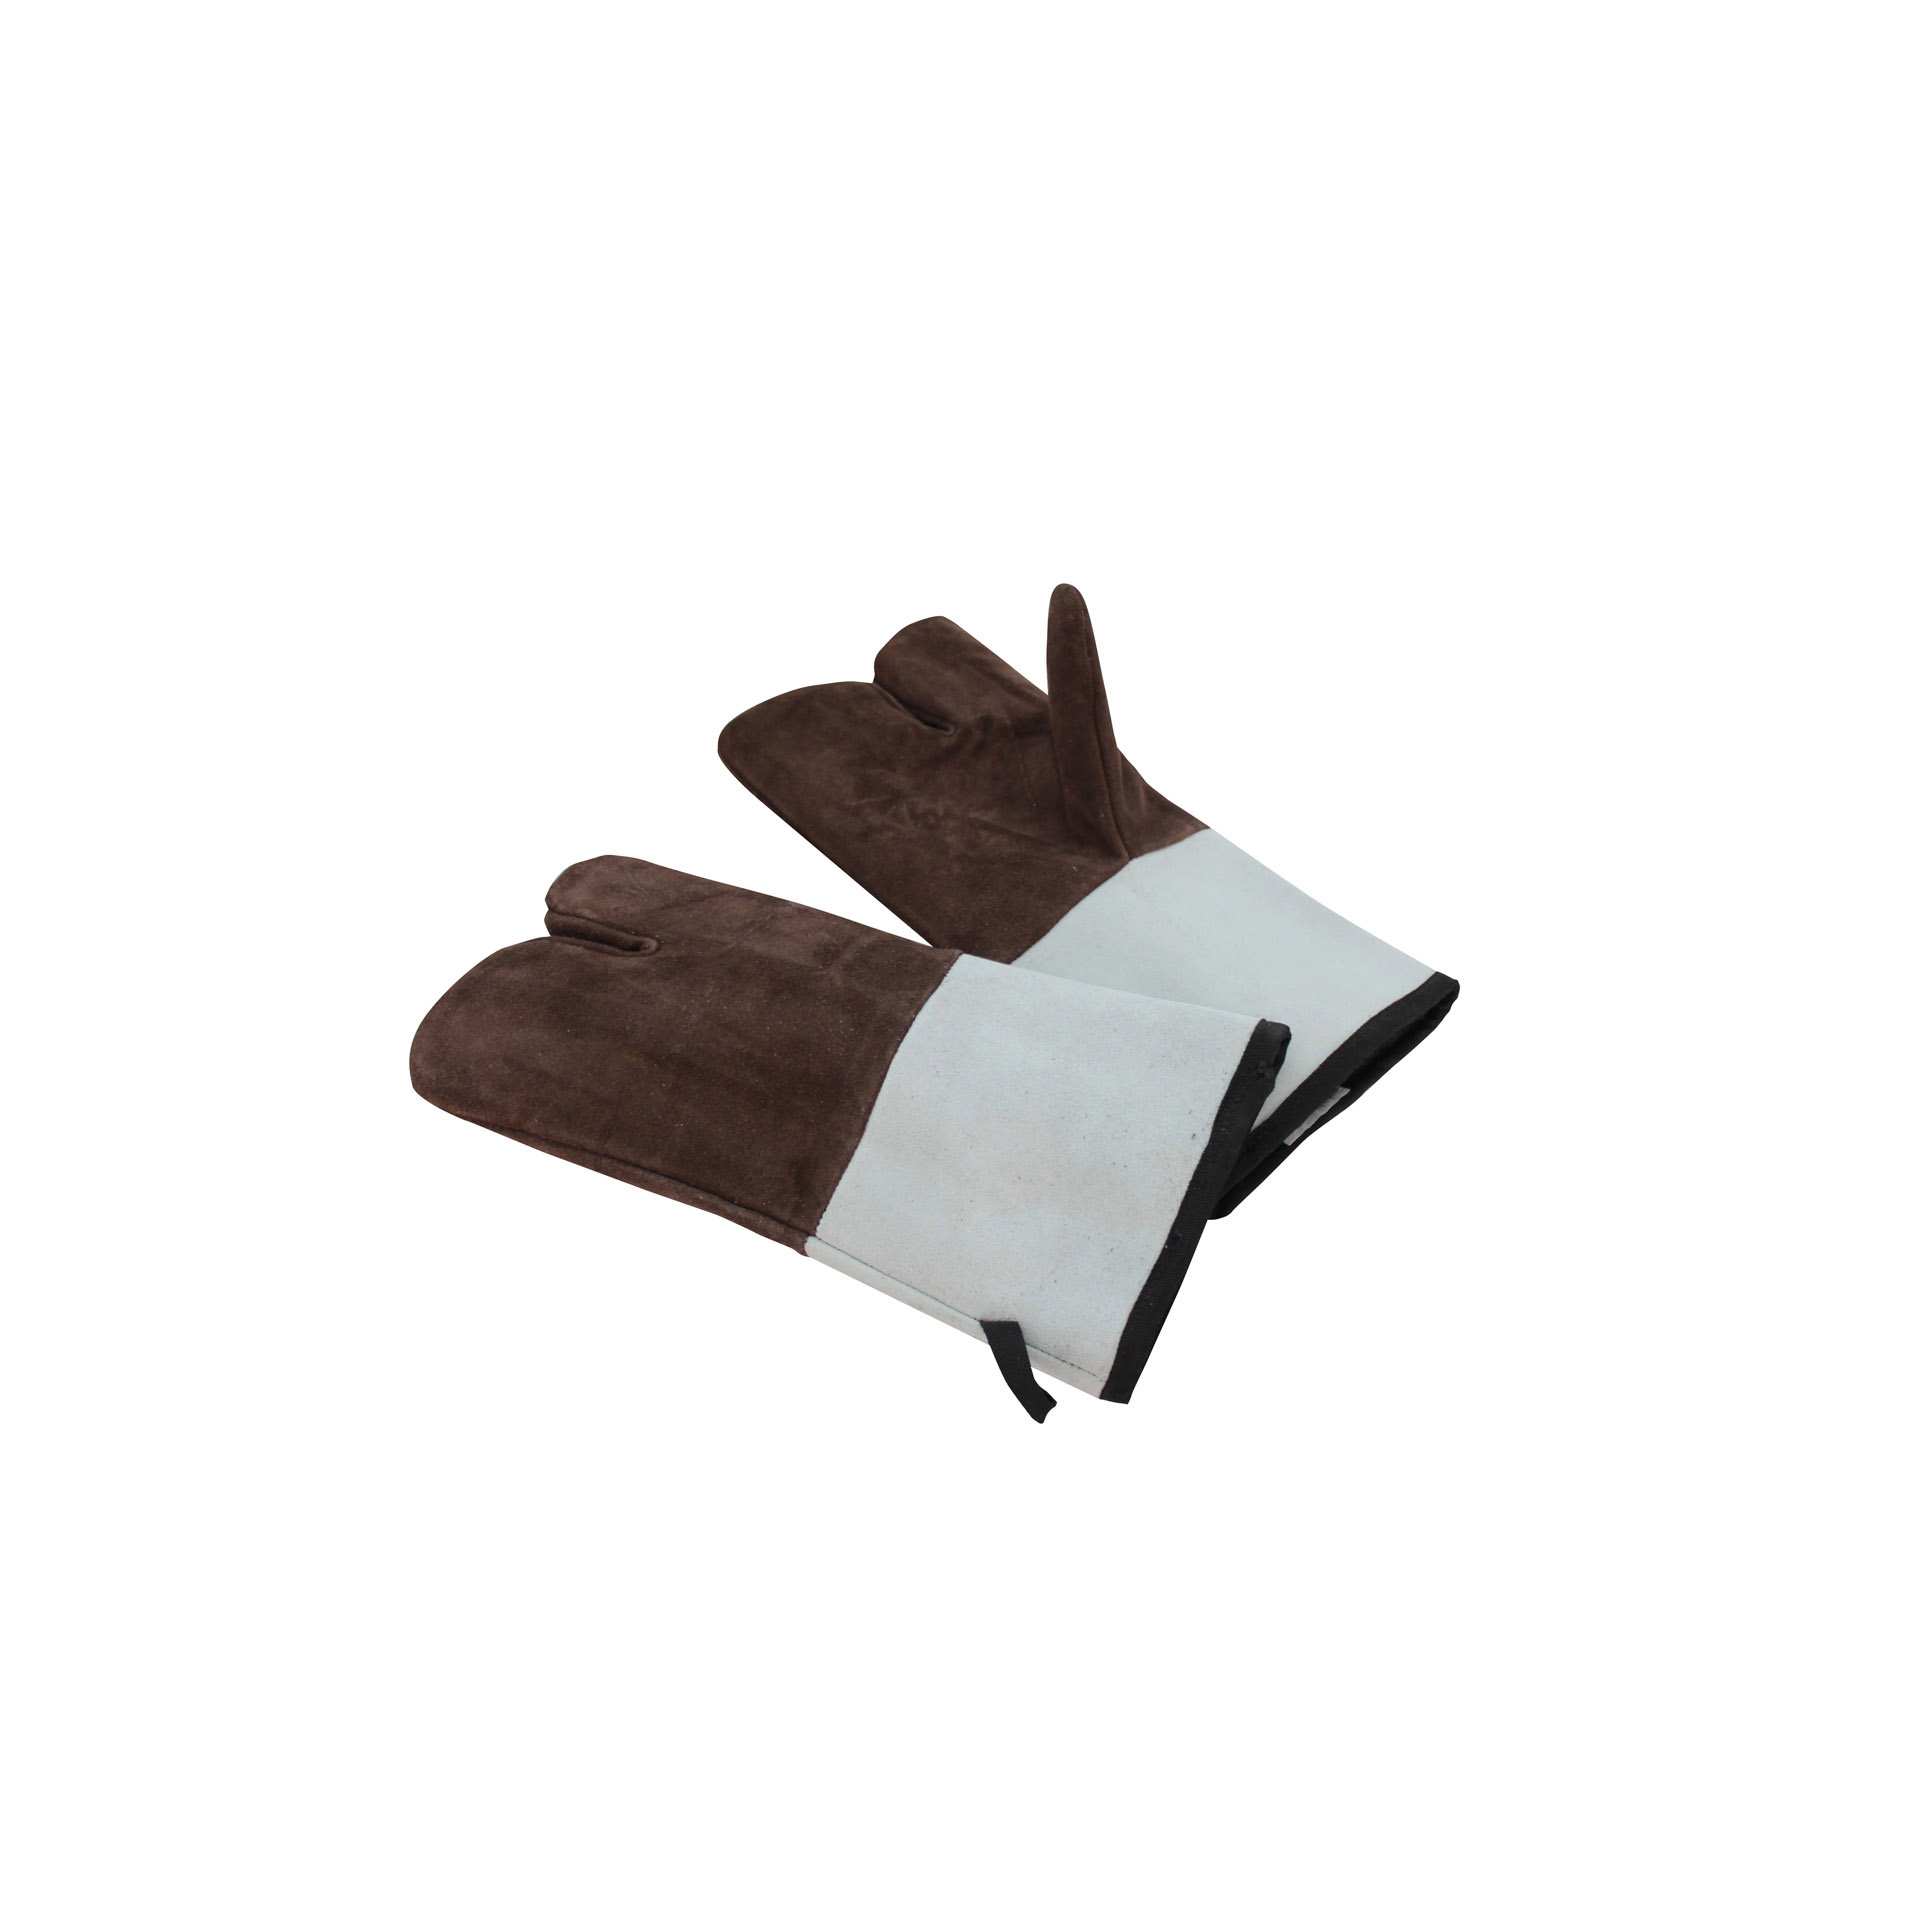 Backhandschuh - 3 Finger mit Stulpen - braun / grau - Abm. 34,0 x 14,0 x 4,0 cm - Leder - 310024-C